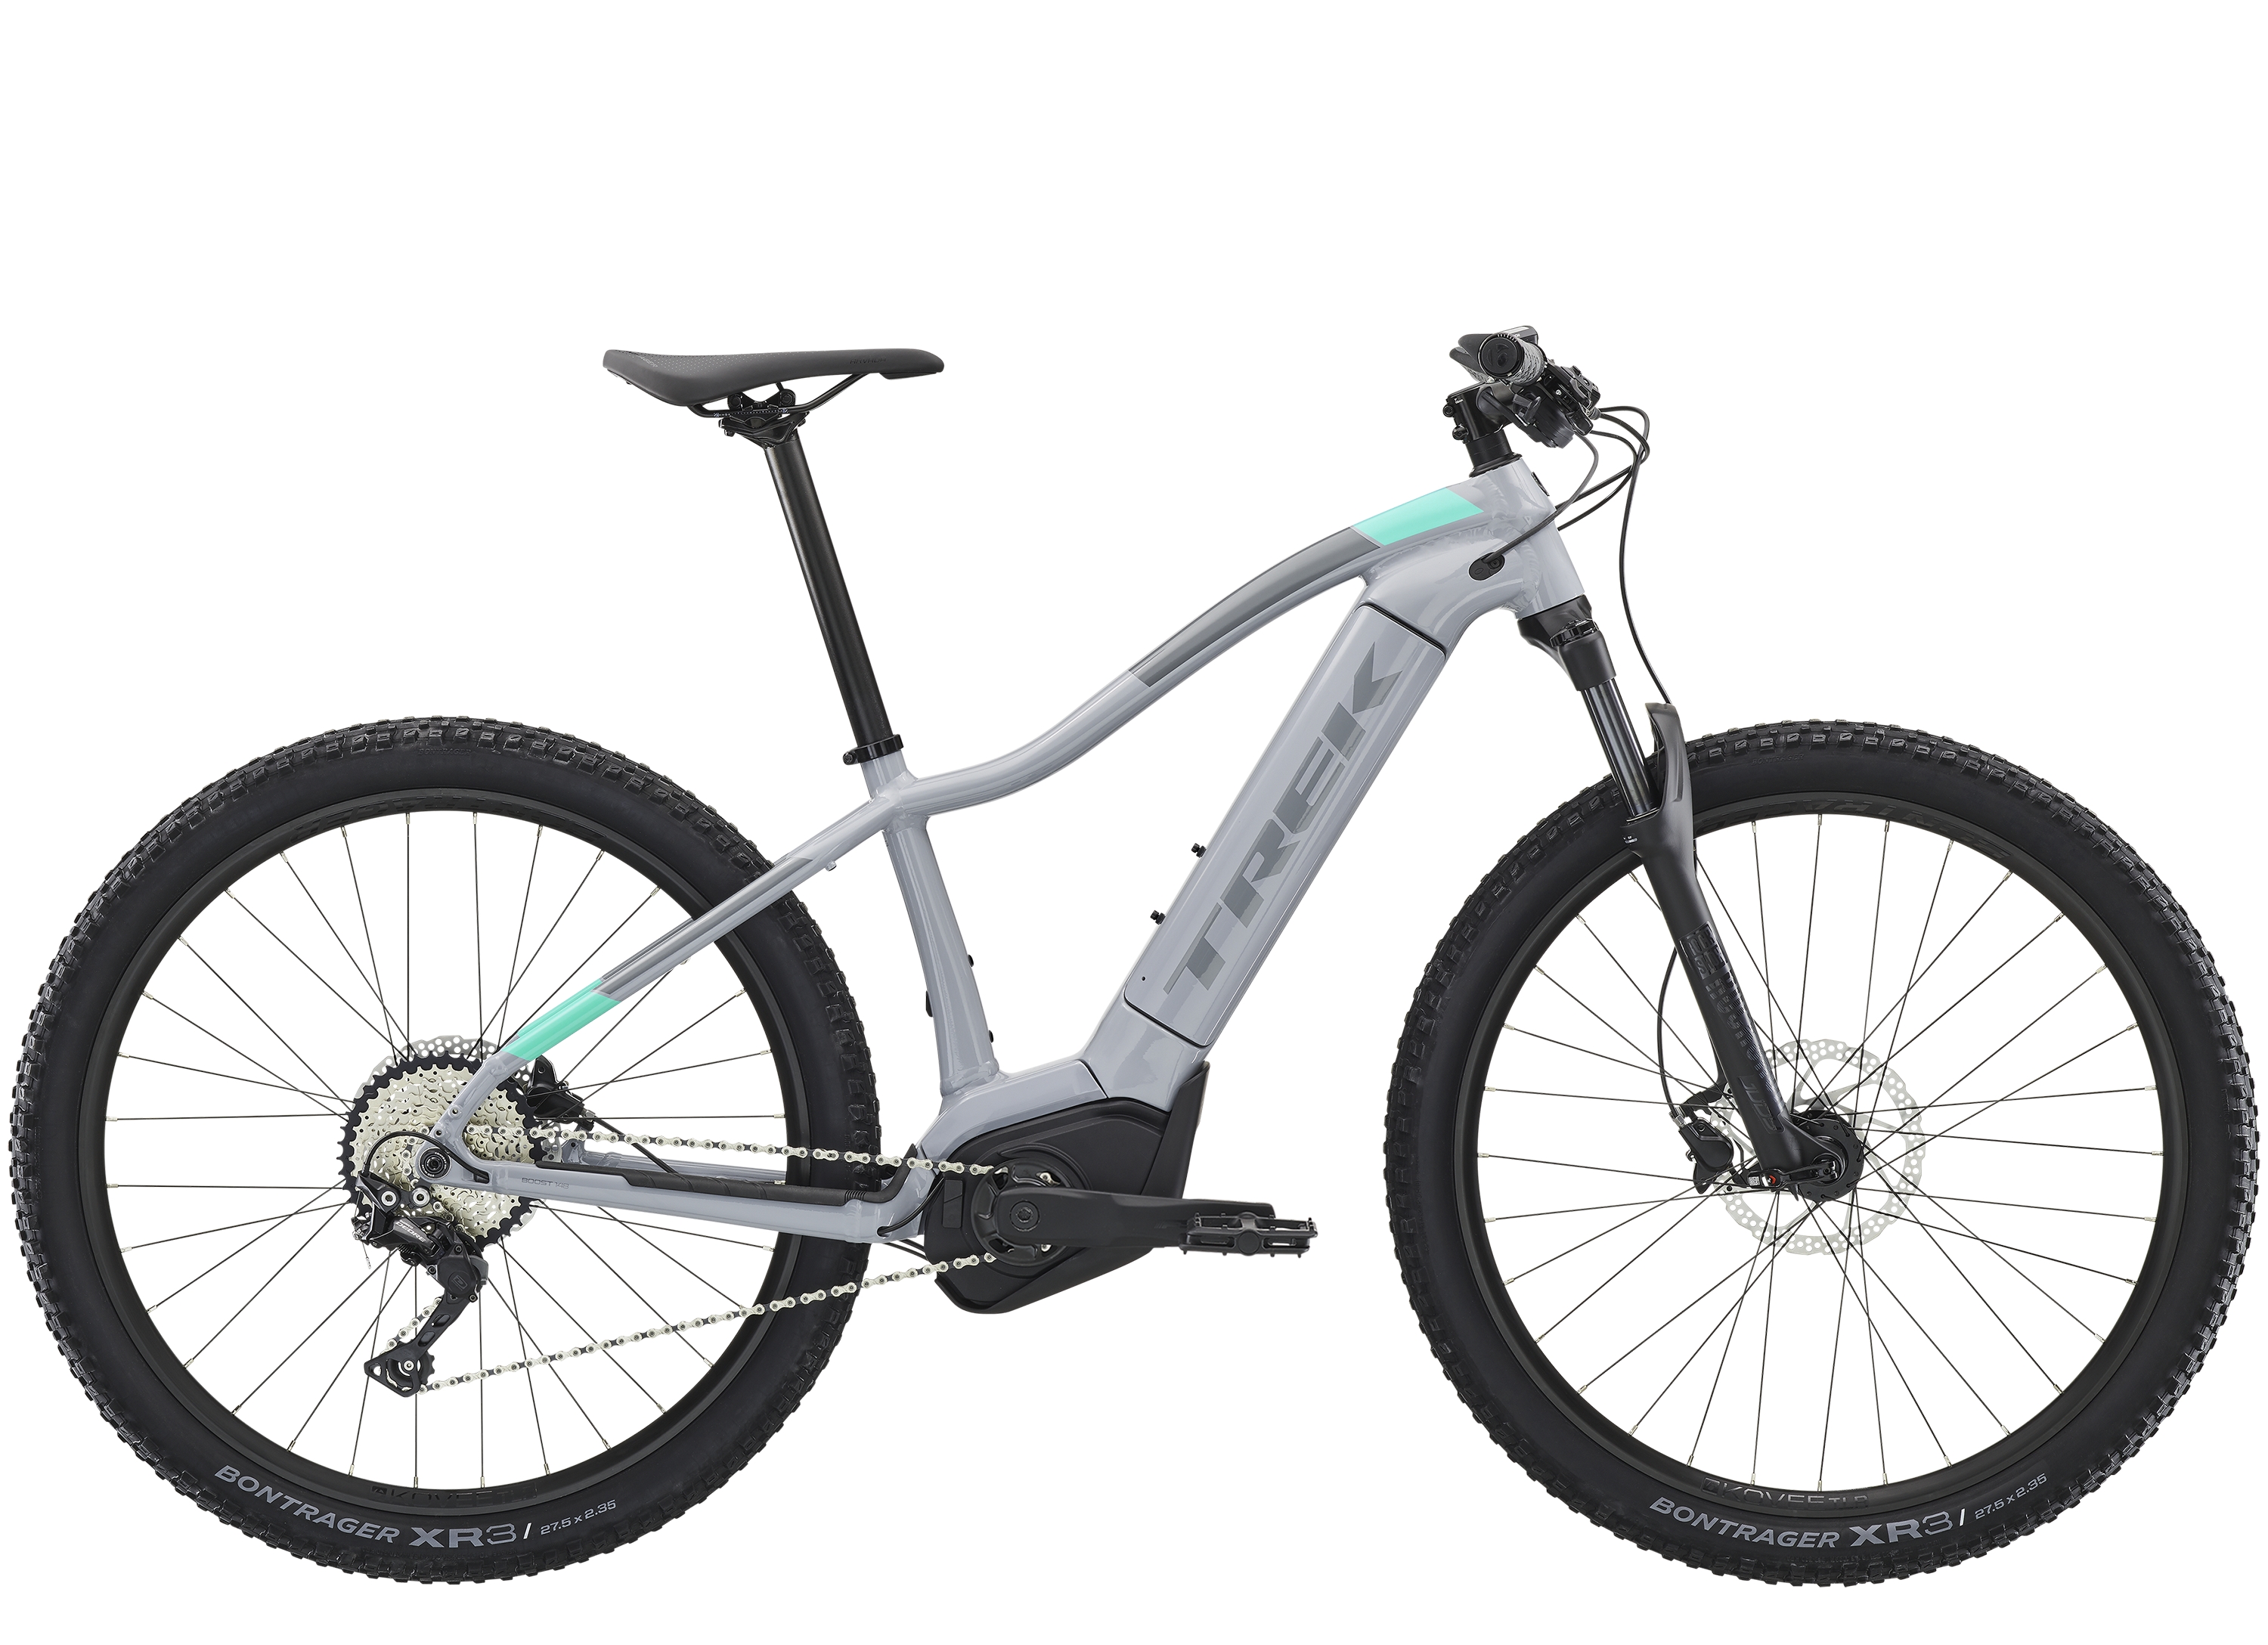 hi trek cycles electric bike